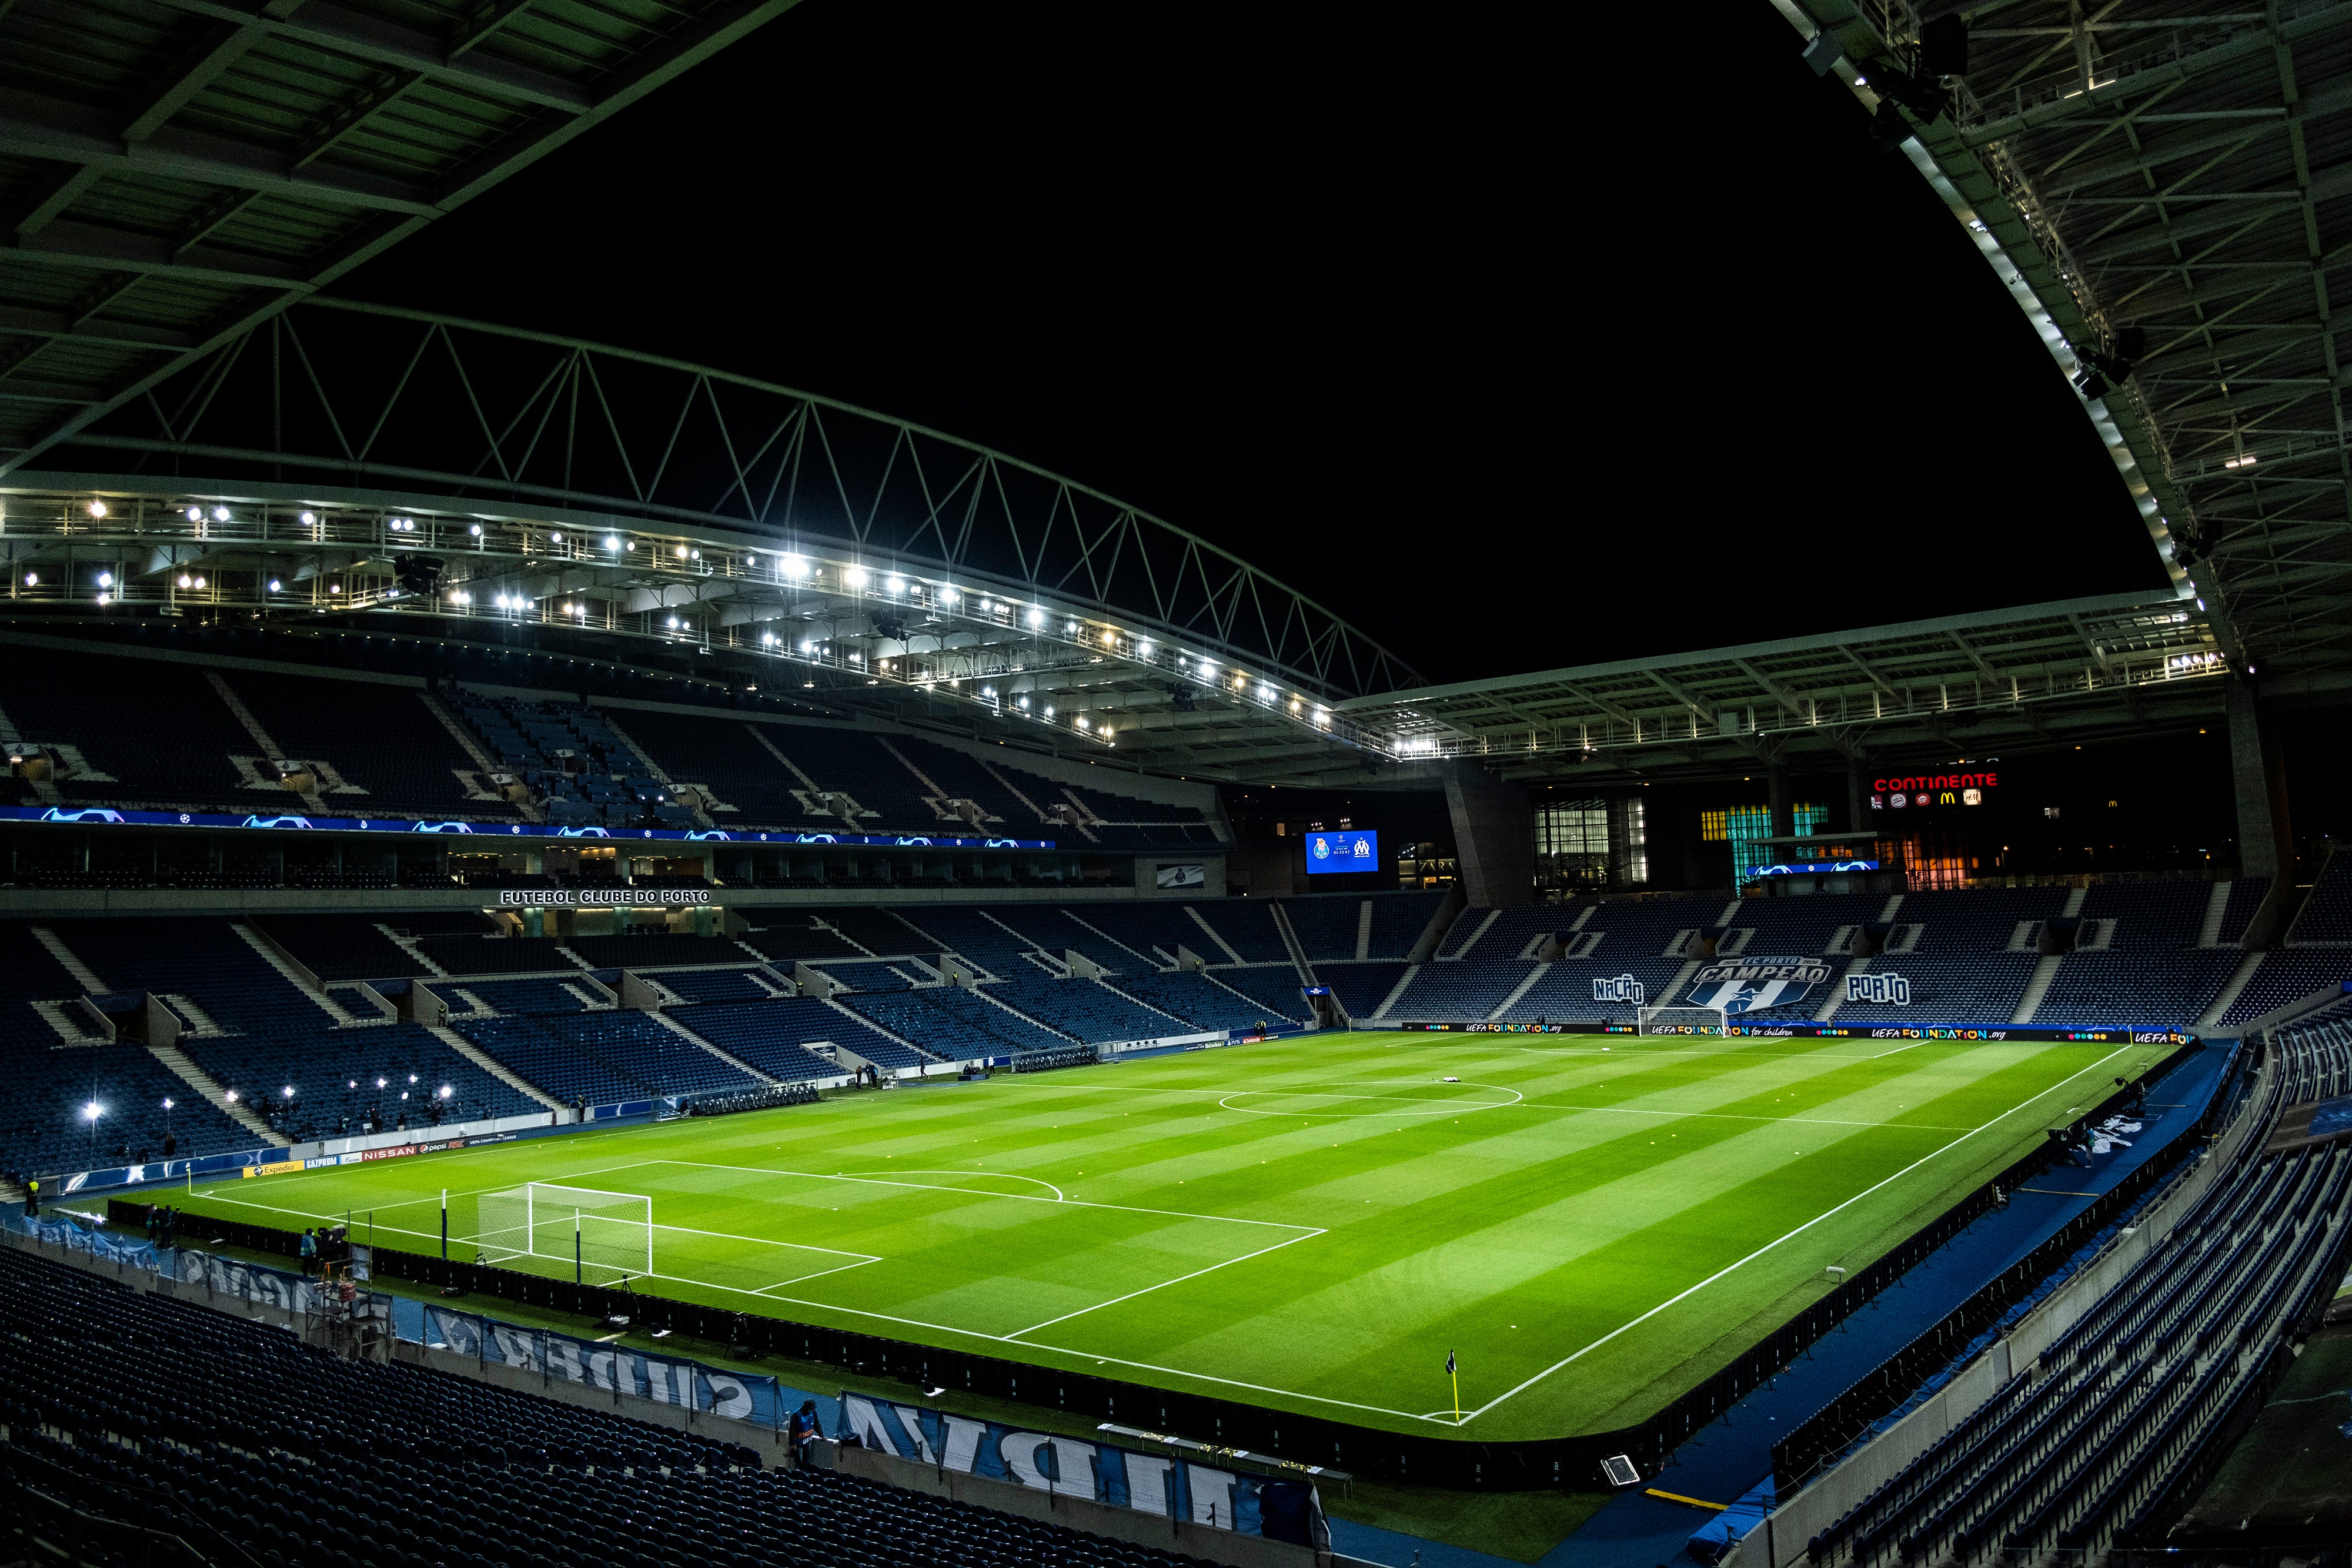 The Estadio do Dragao will host the 2021 Champions League final